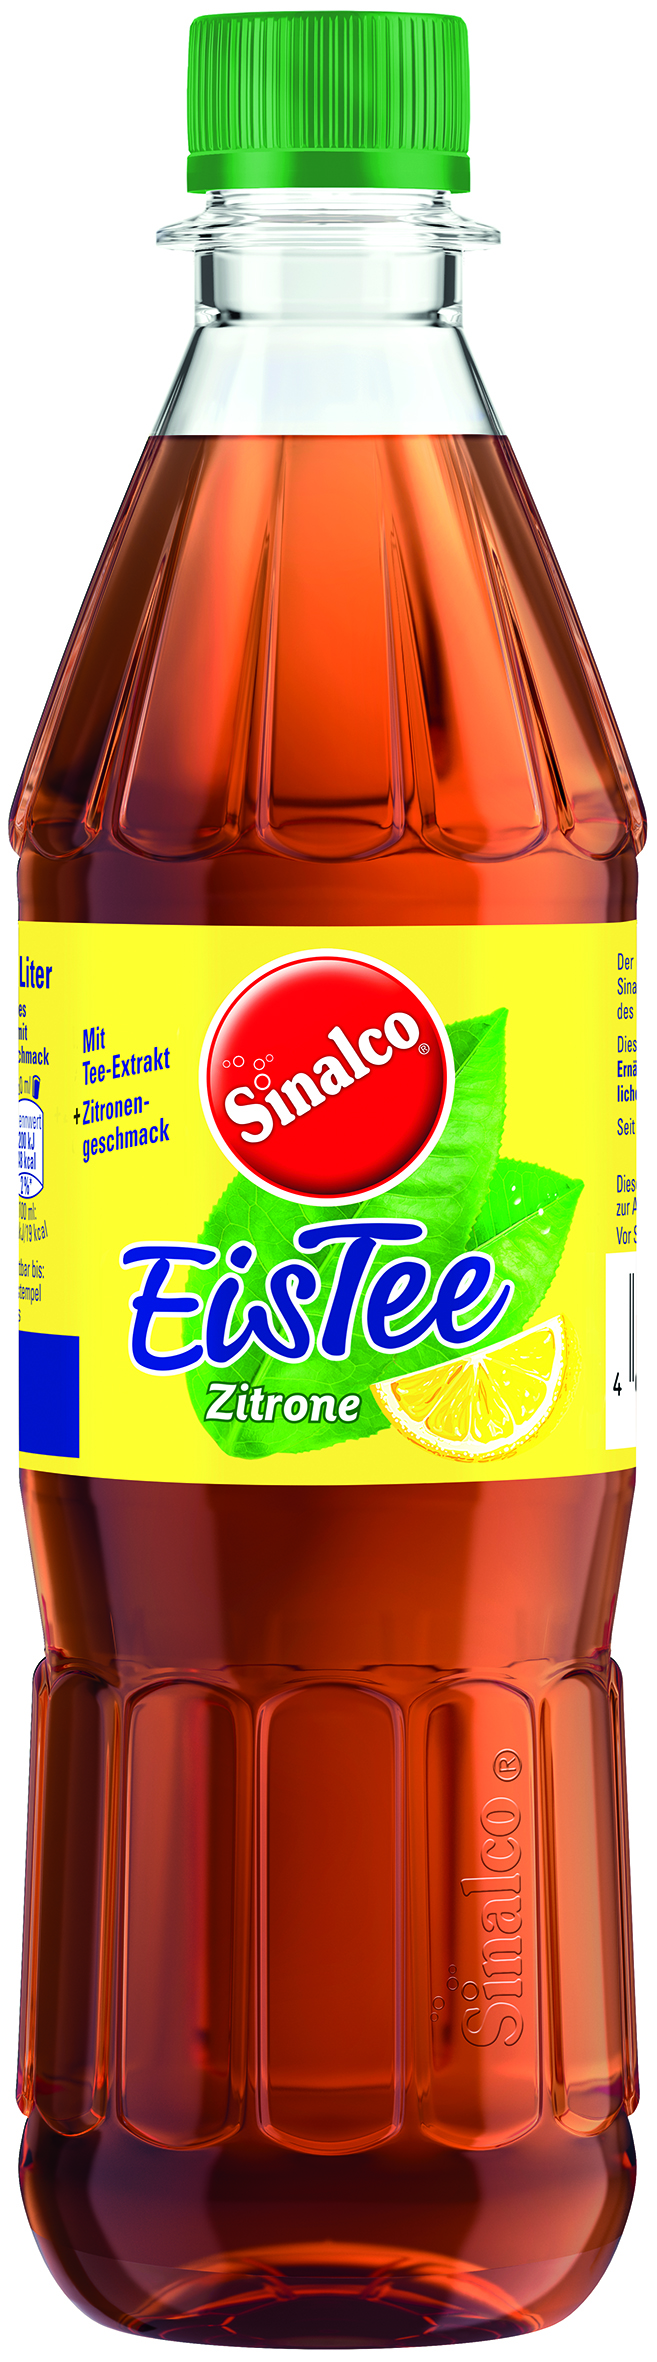 Sinalco Eistee Zitrone